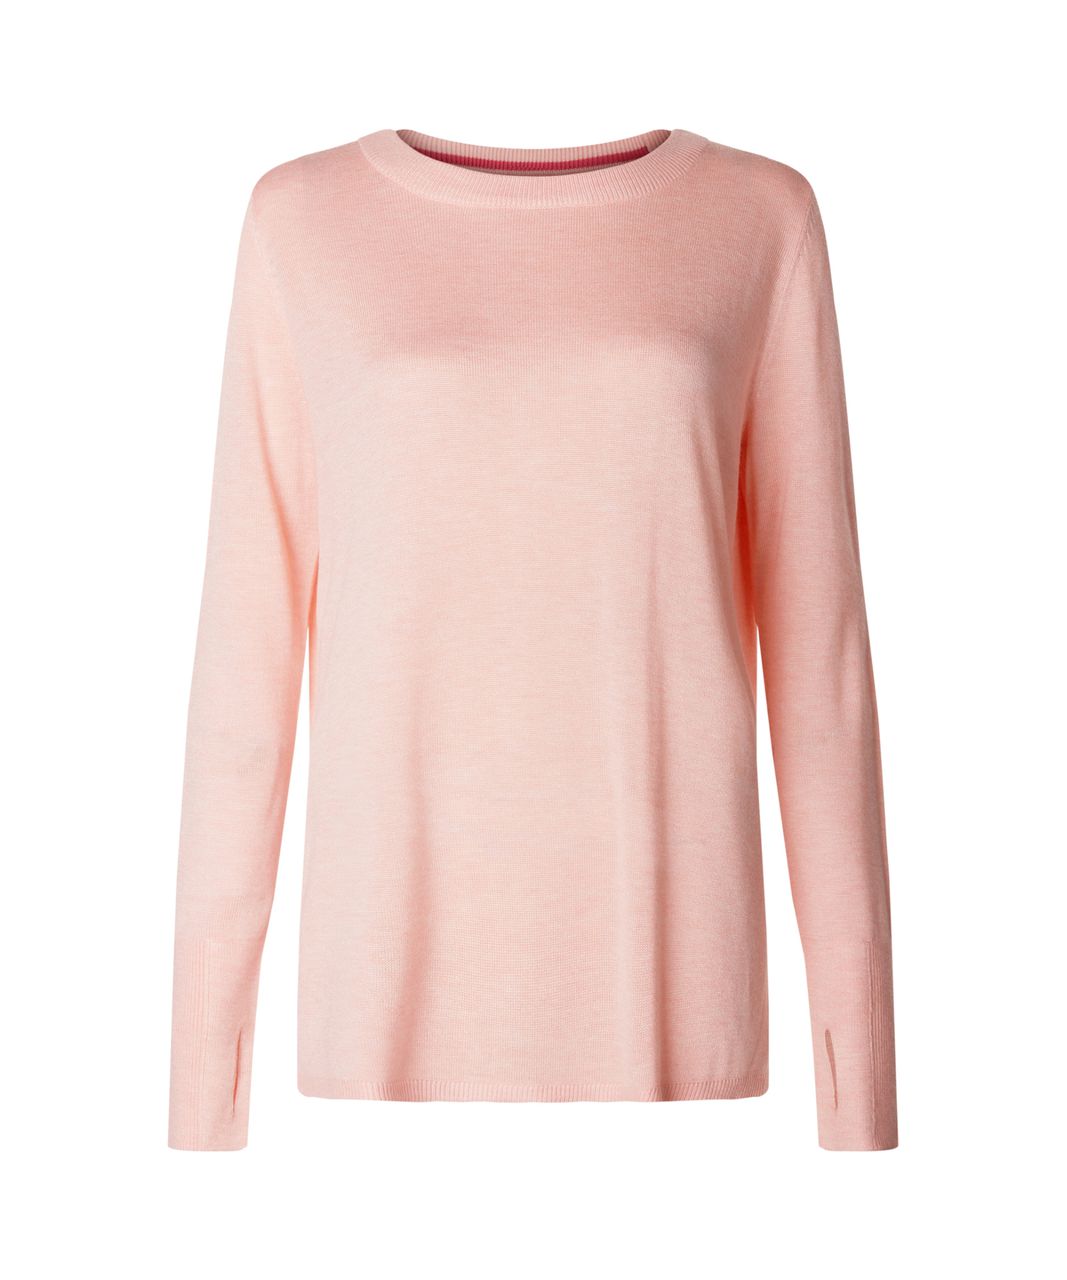 Lululemon Bring It Backbend Sweater - Heathered Minty Pink